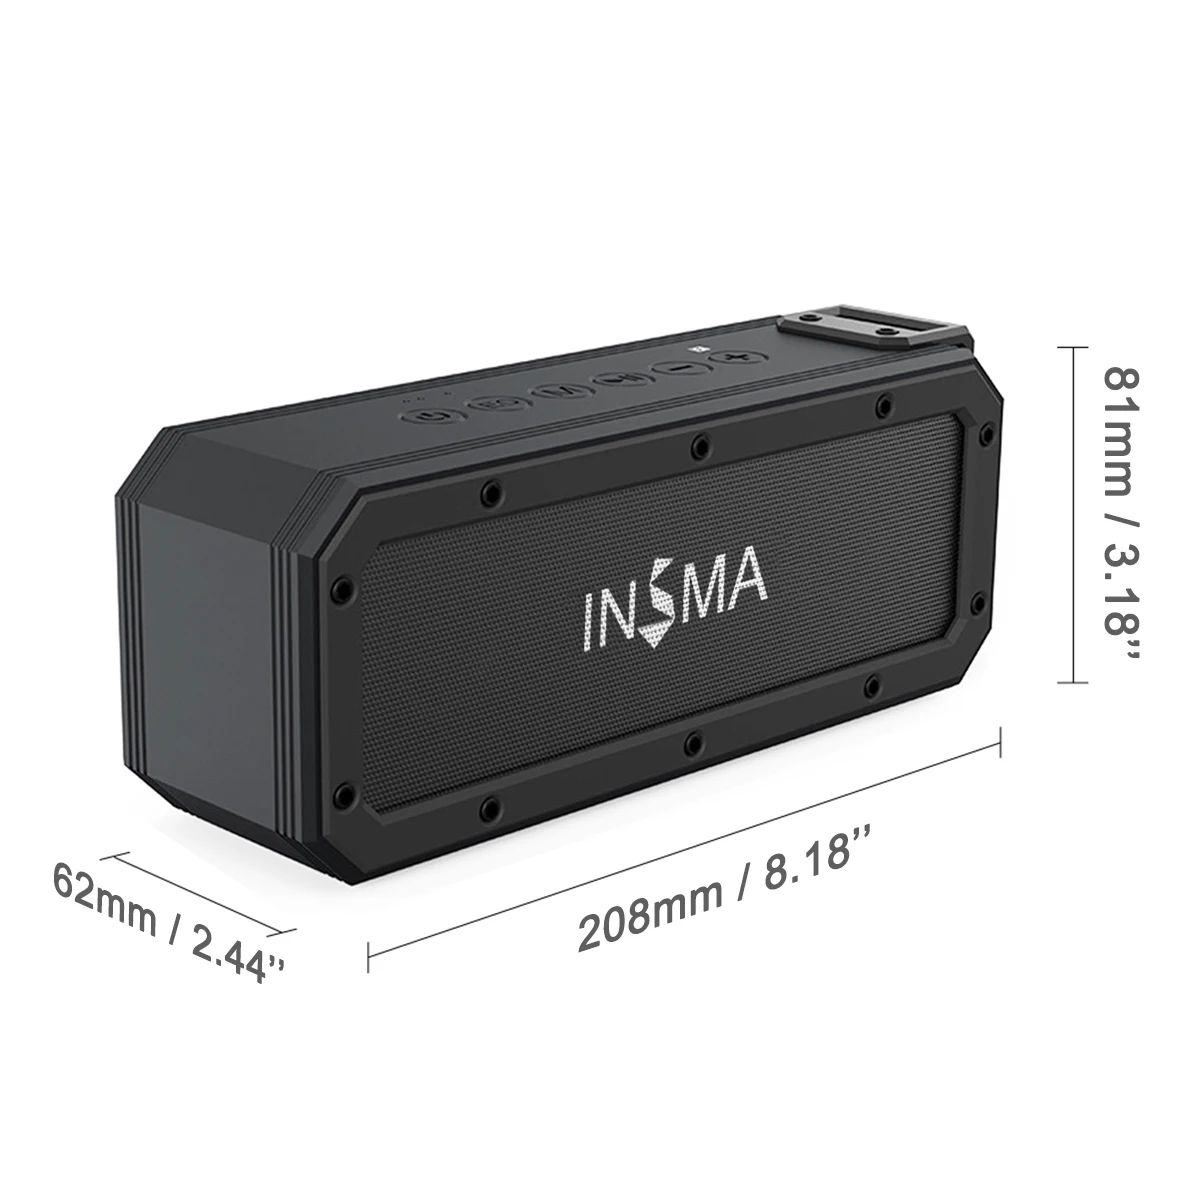 

INSMA S400 PLUS 40W bluetooth Speaker NFC Portable Speakers IPX7 Waterproof Subwoofer Outdoor TWS Boombox Wireless Loudspeakers